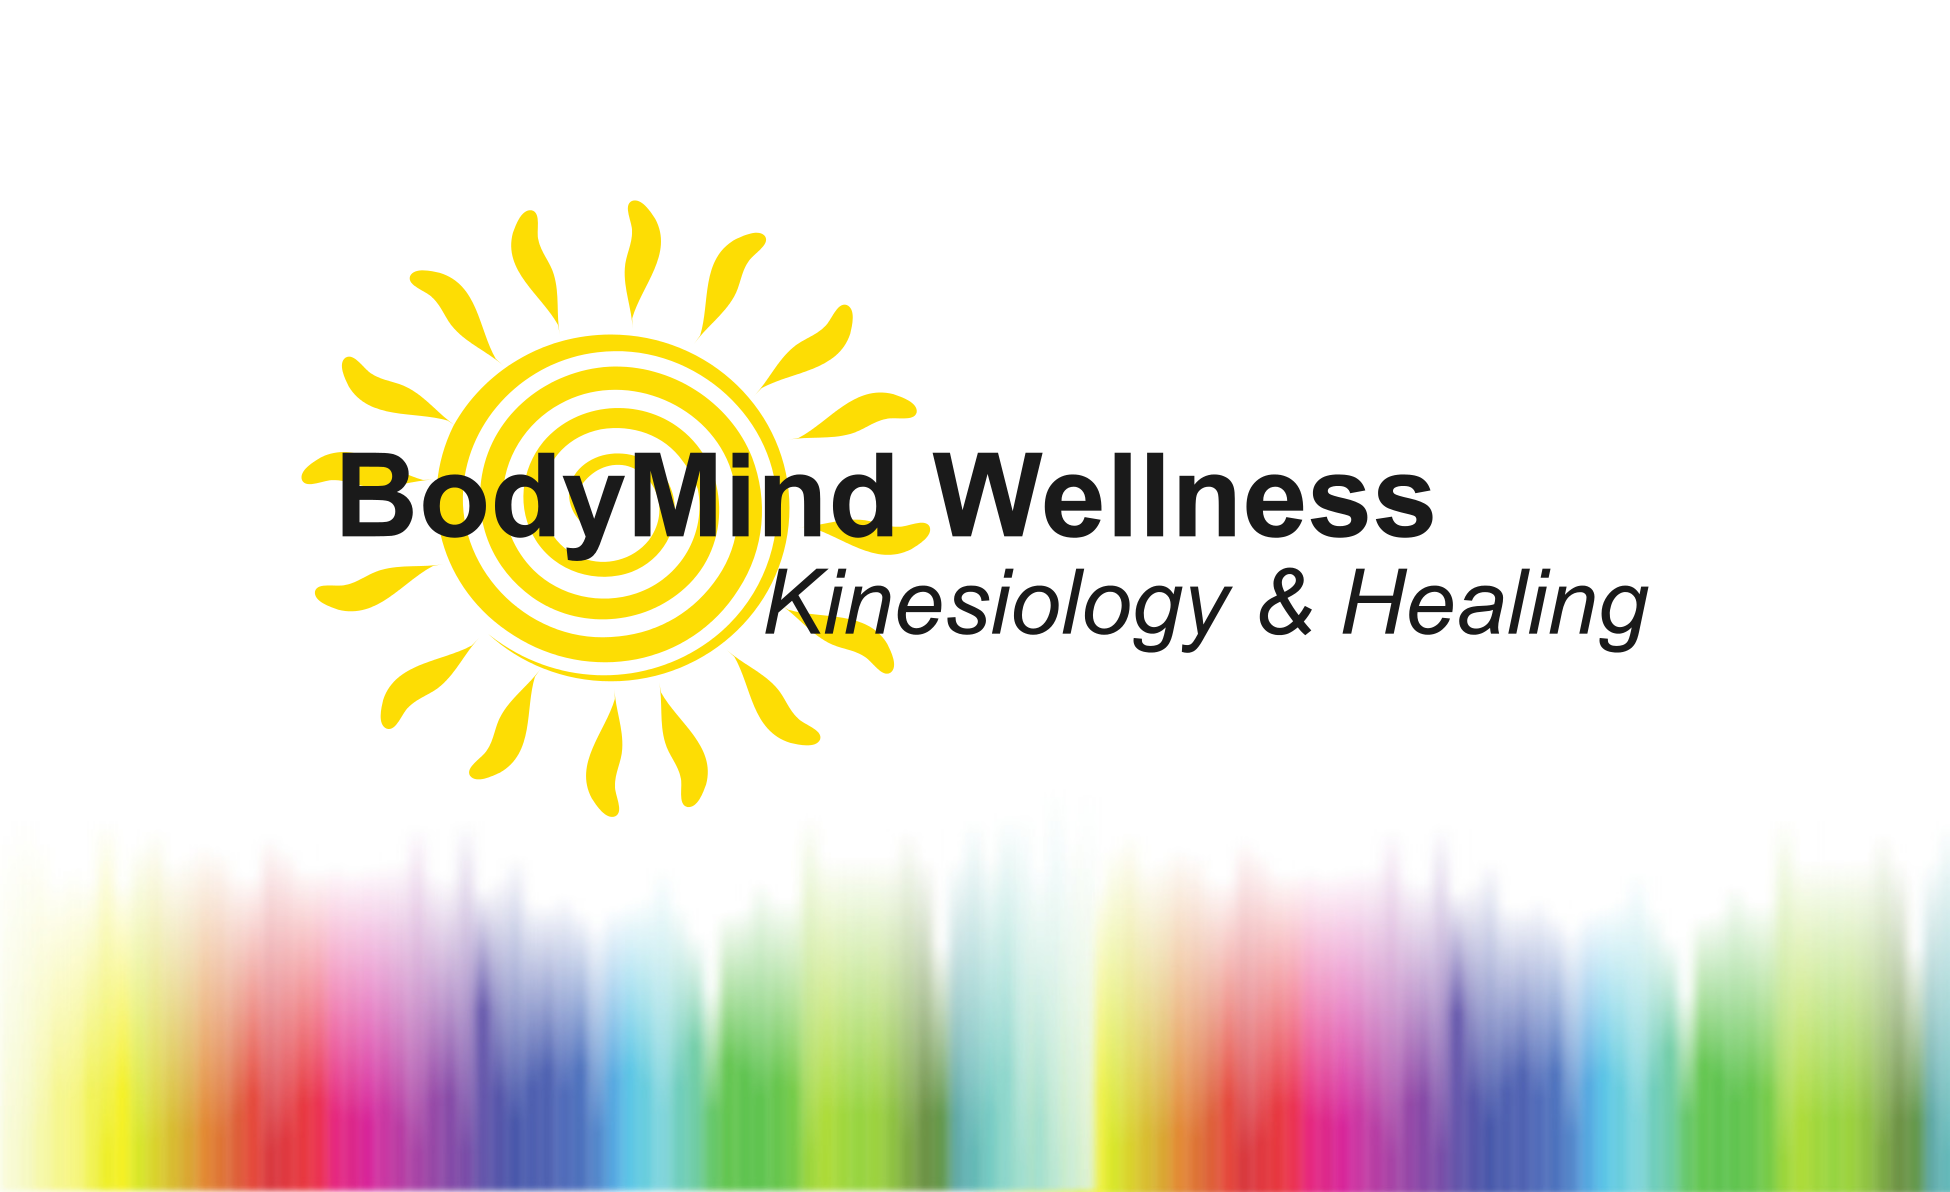 BodyMind Wellness Kinesiology & Healing's logo